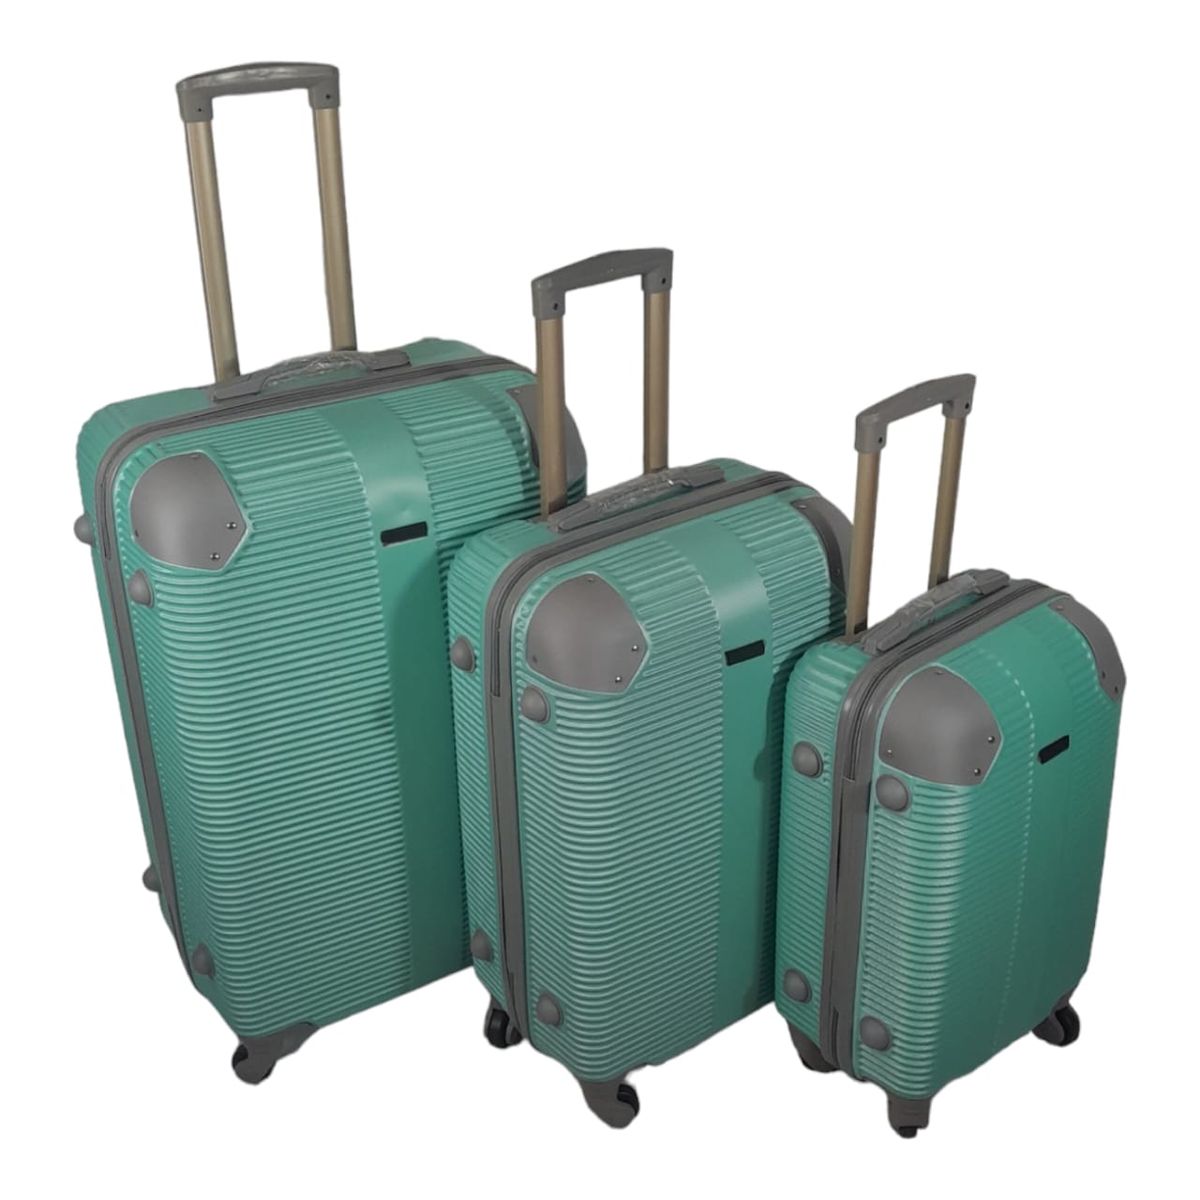 Quad Wheel Travel Luggage - 3 Piece Luggage Set - Protected - Soda Green